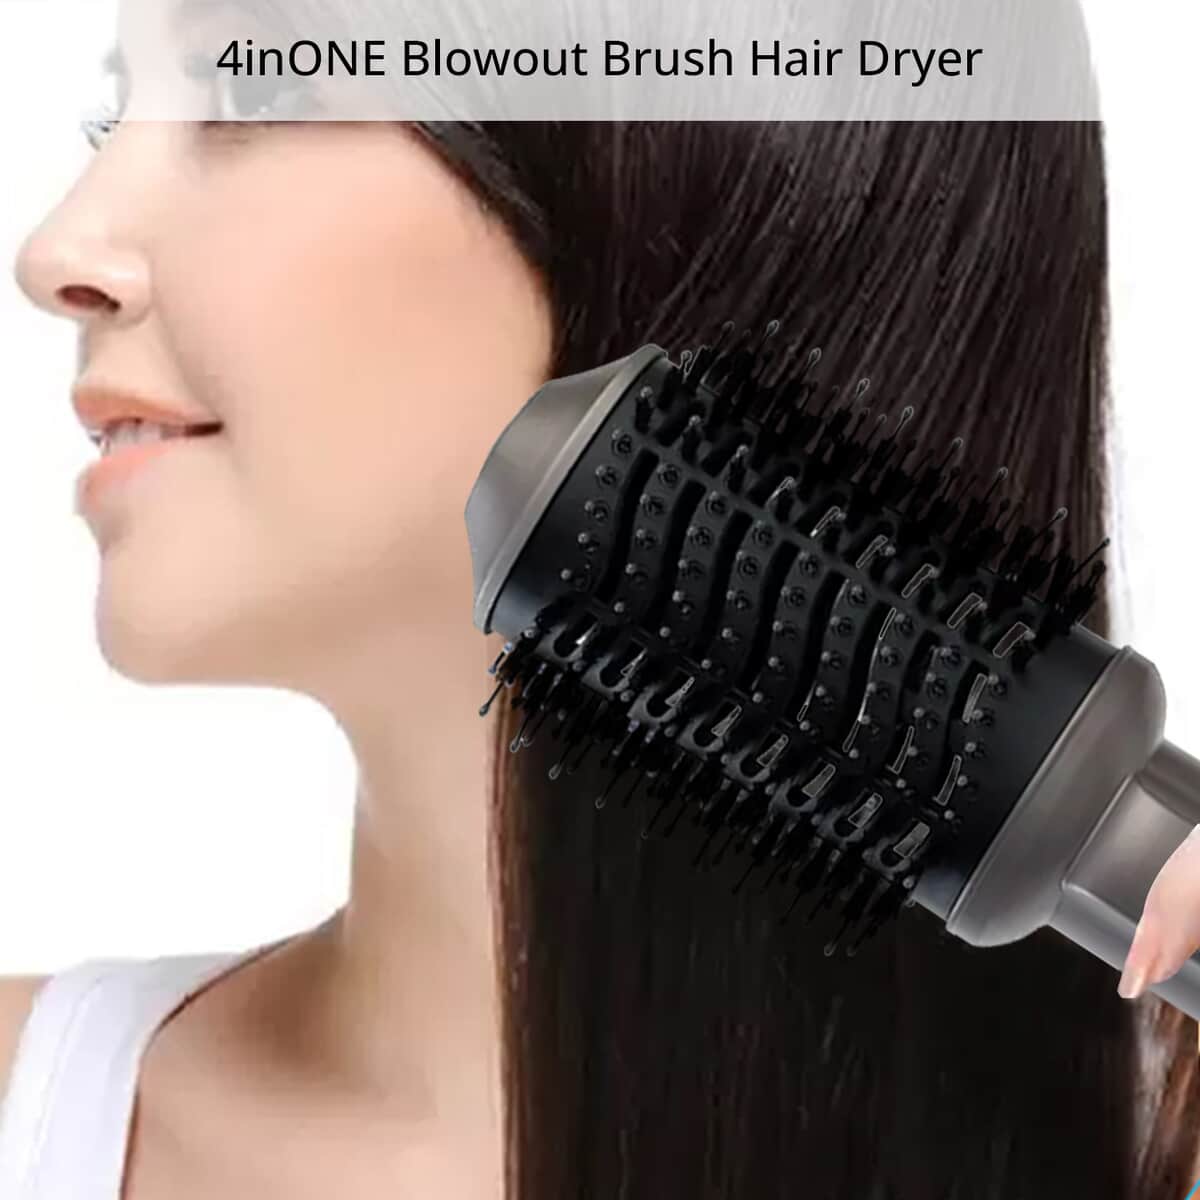 Hauteness 4inONE Blowout Brush Hair Dryer, 4 in 1 1000 Watt Electric 4 Modes Multi Hair Styler Blowout Brush Hair Dryer - Black Charcoal image number 1